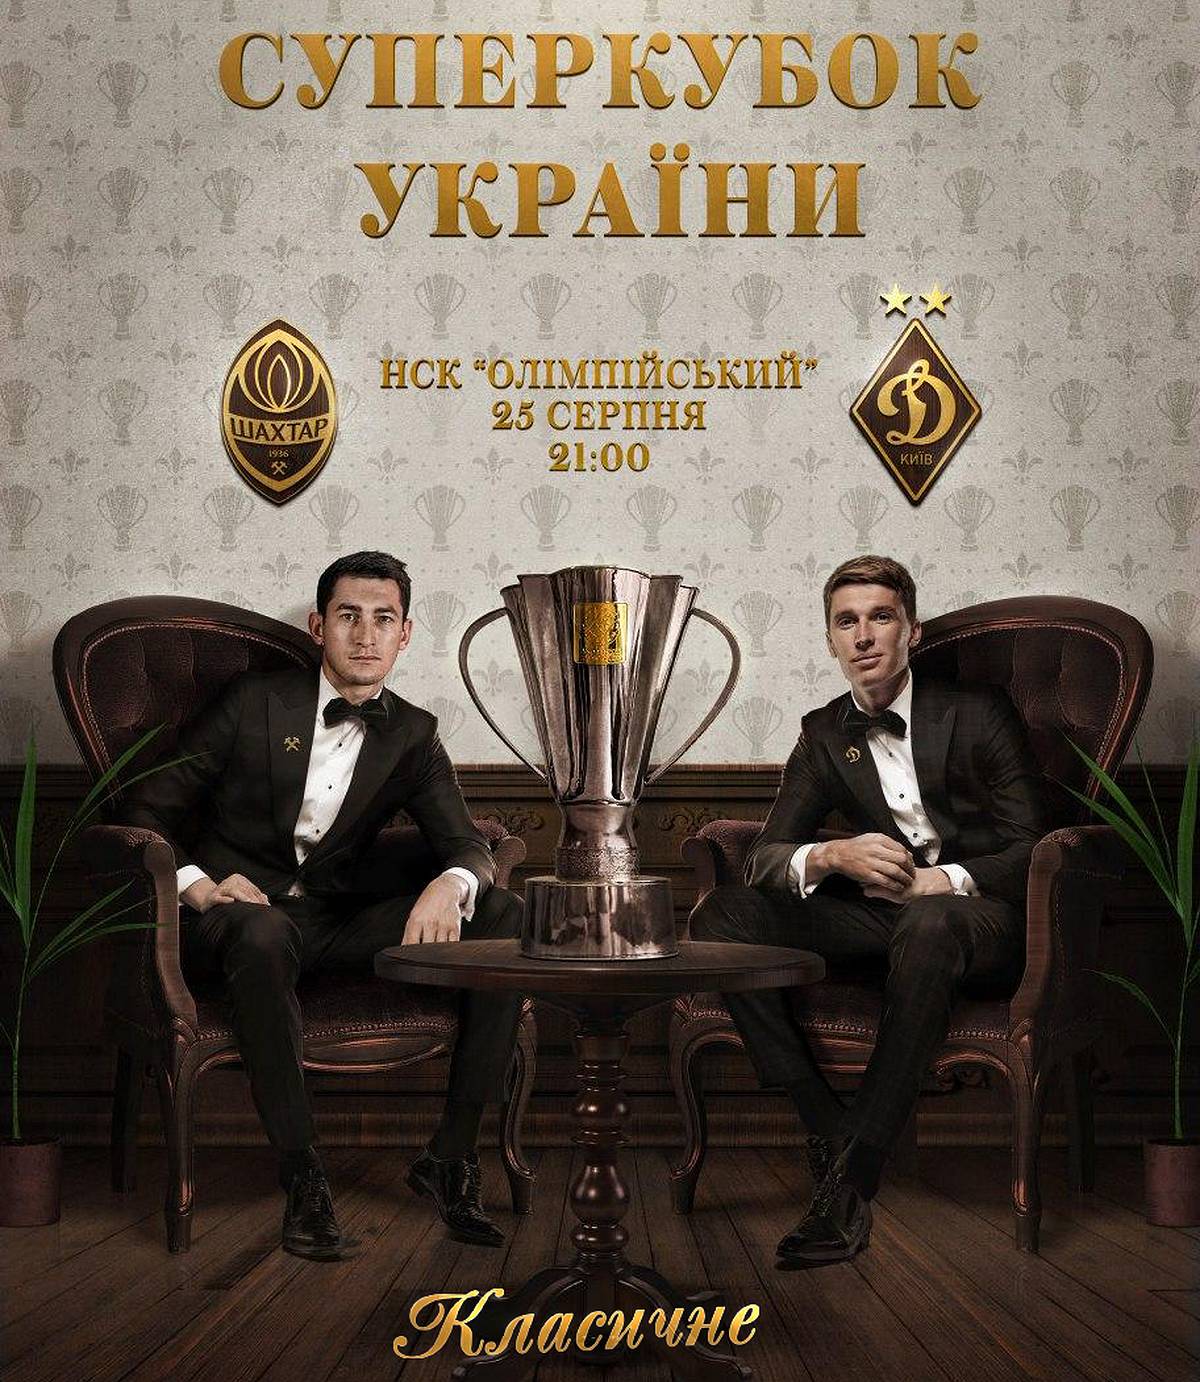 https://dynamo.kiev.ua/media/posts/2020/08/18/111_Dynamo.kiev.ua_3.jpg